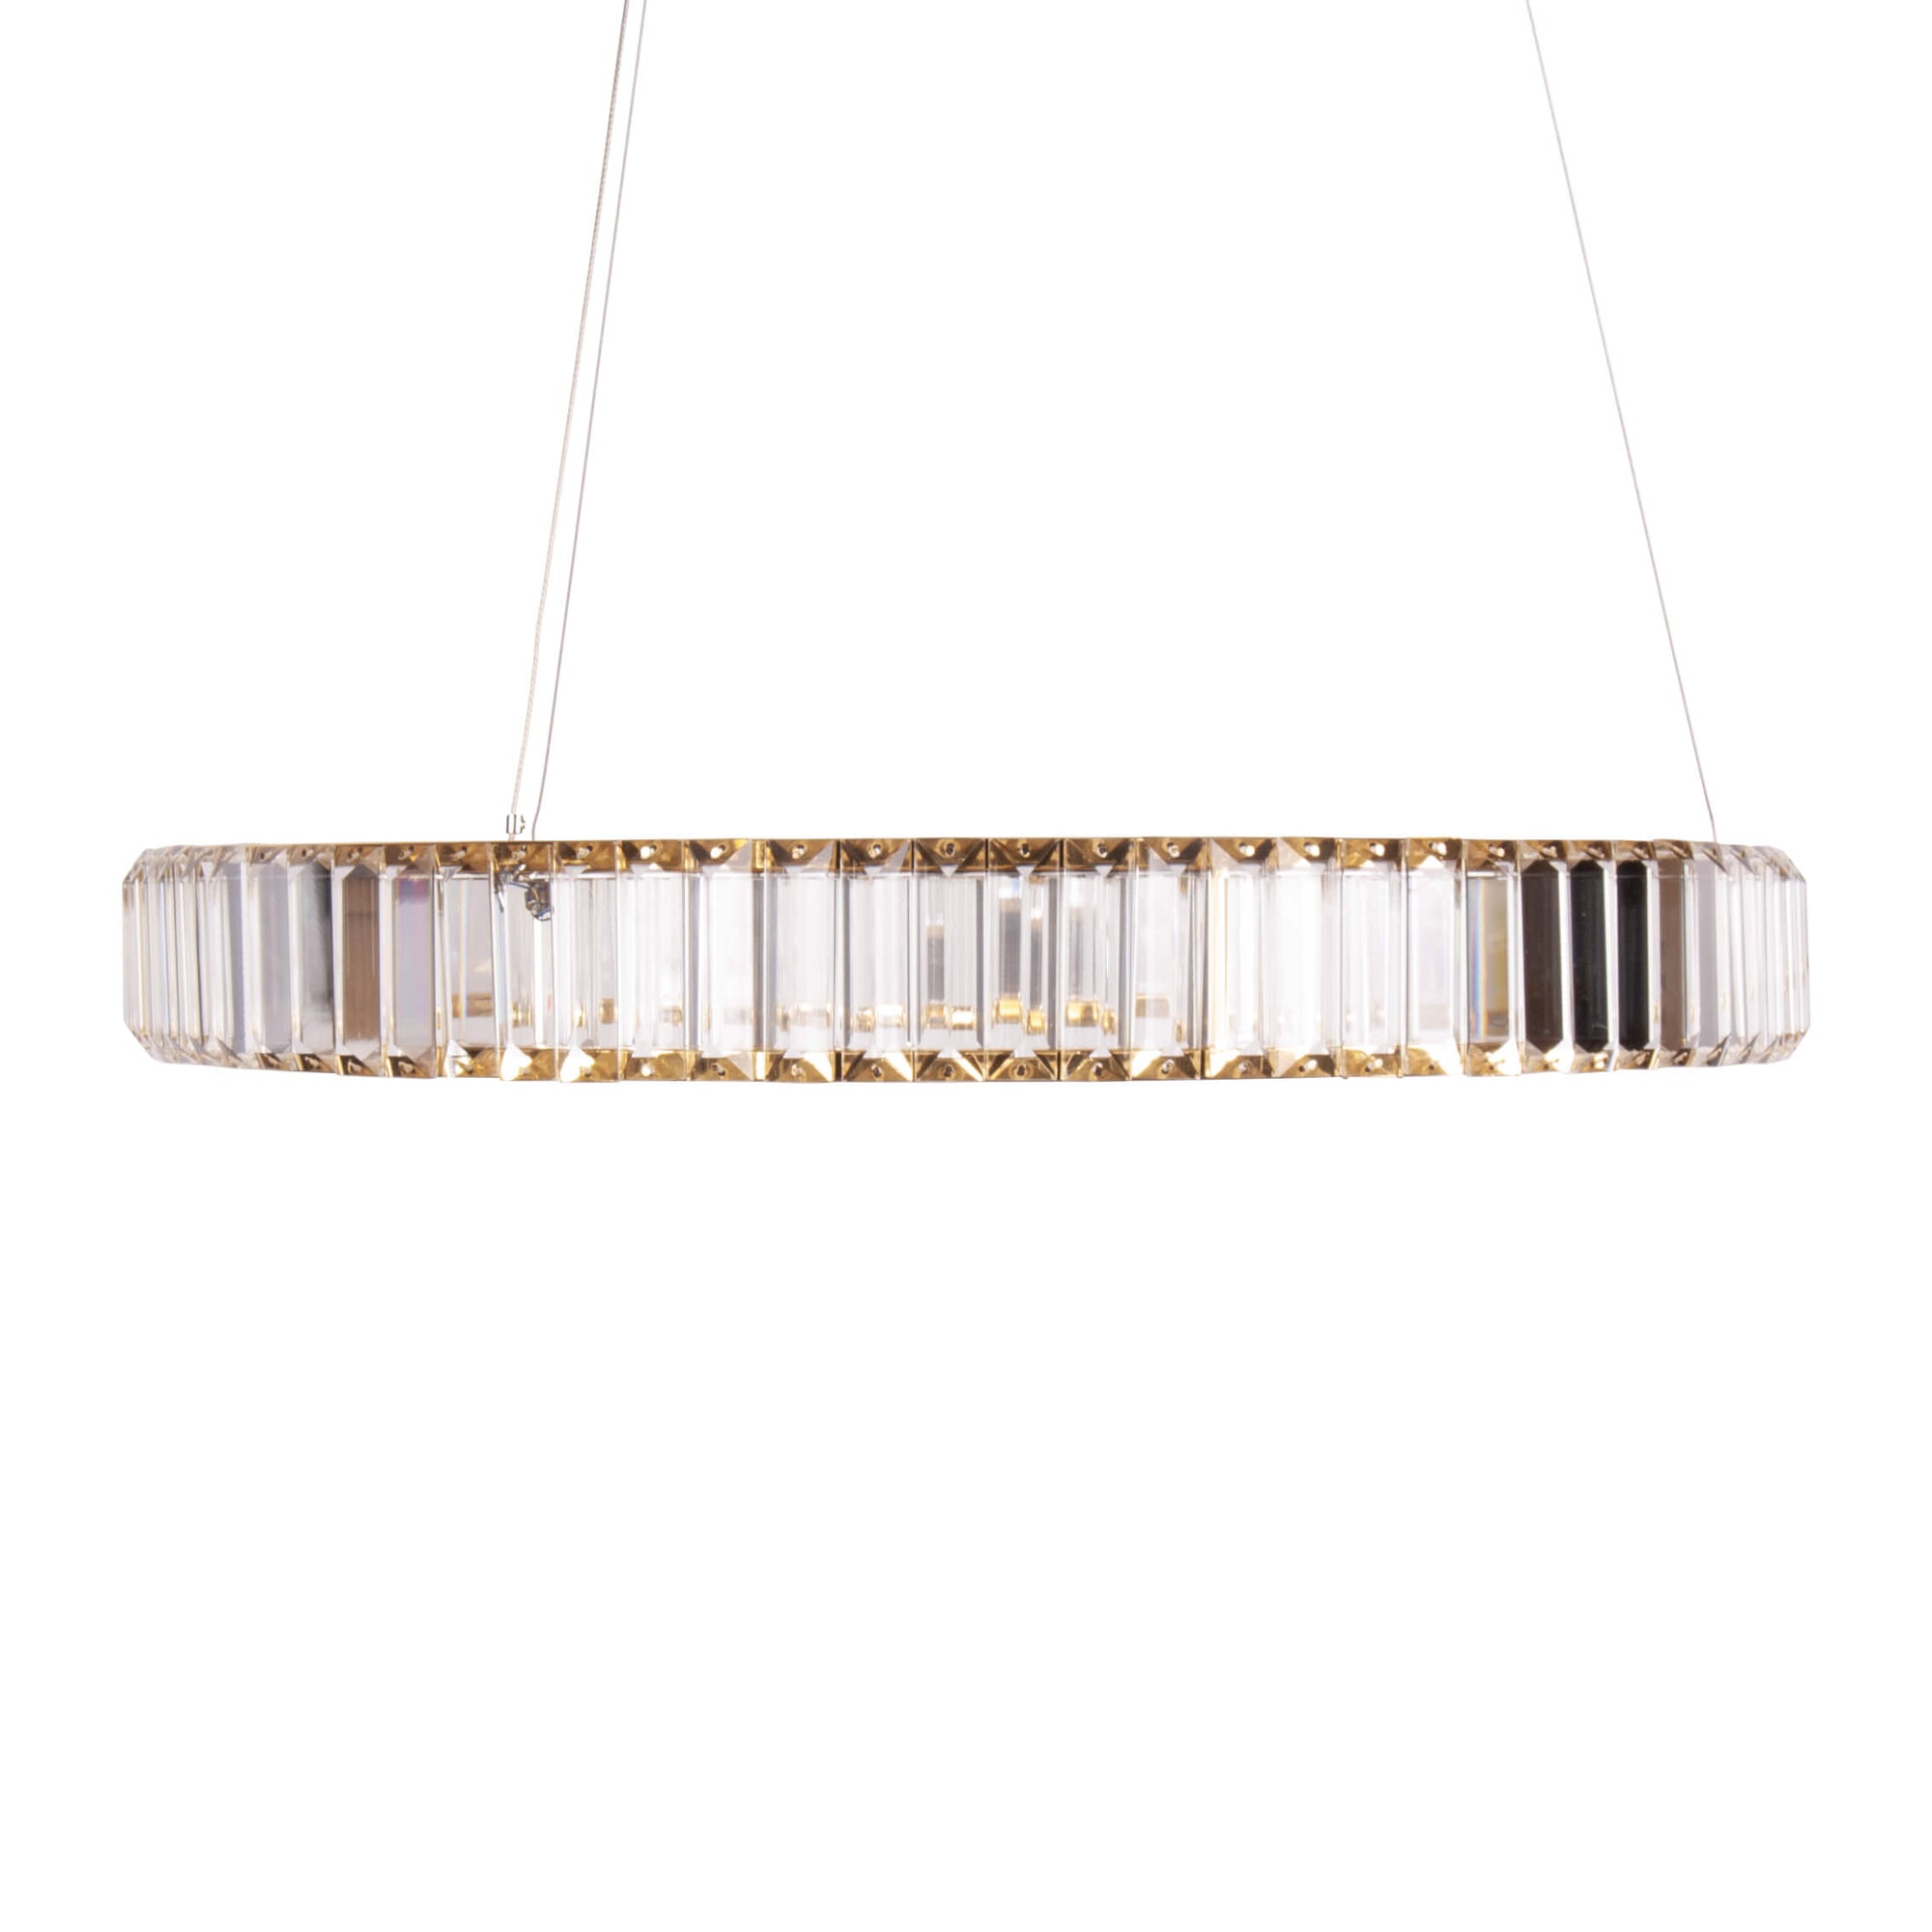 Lampa suspendata REY S6 aurie - Design modern, elegant